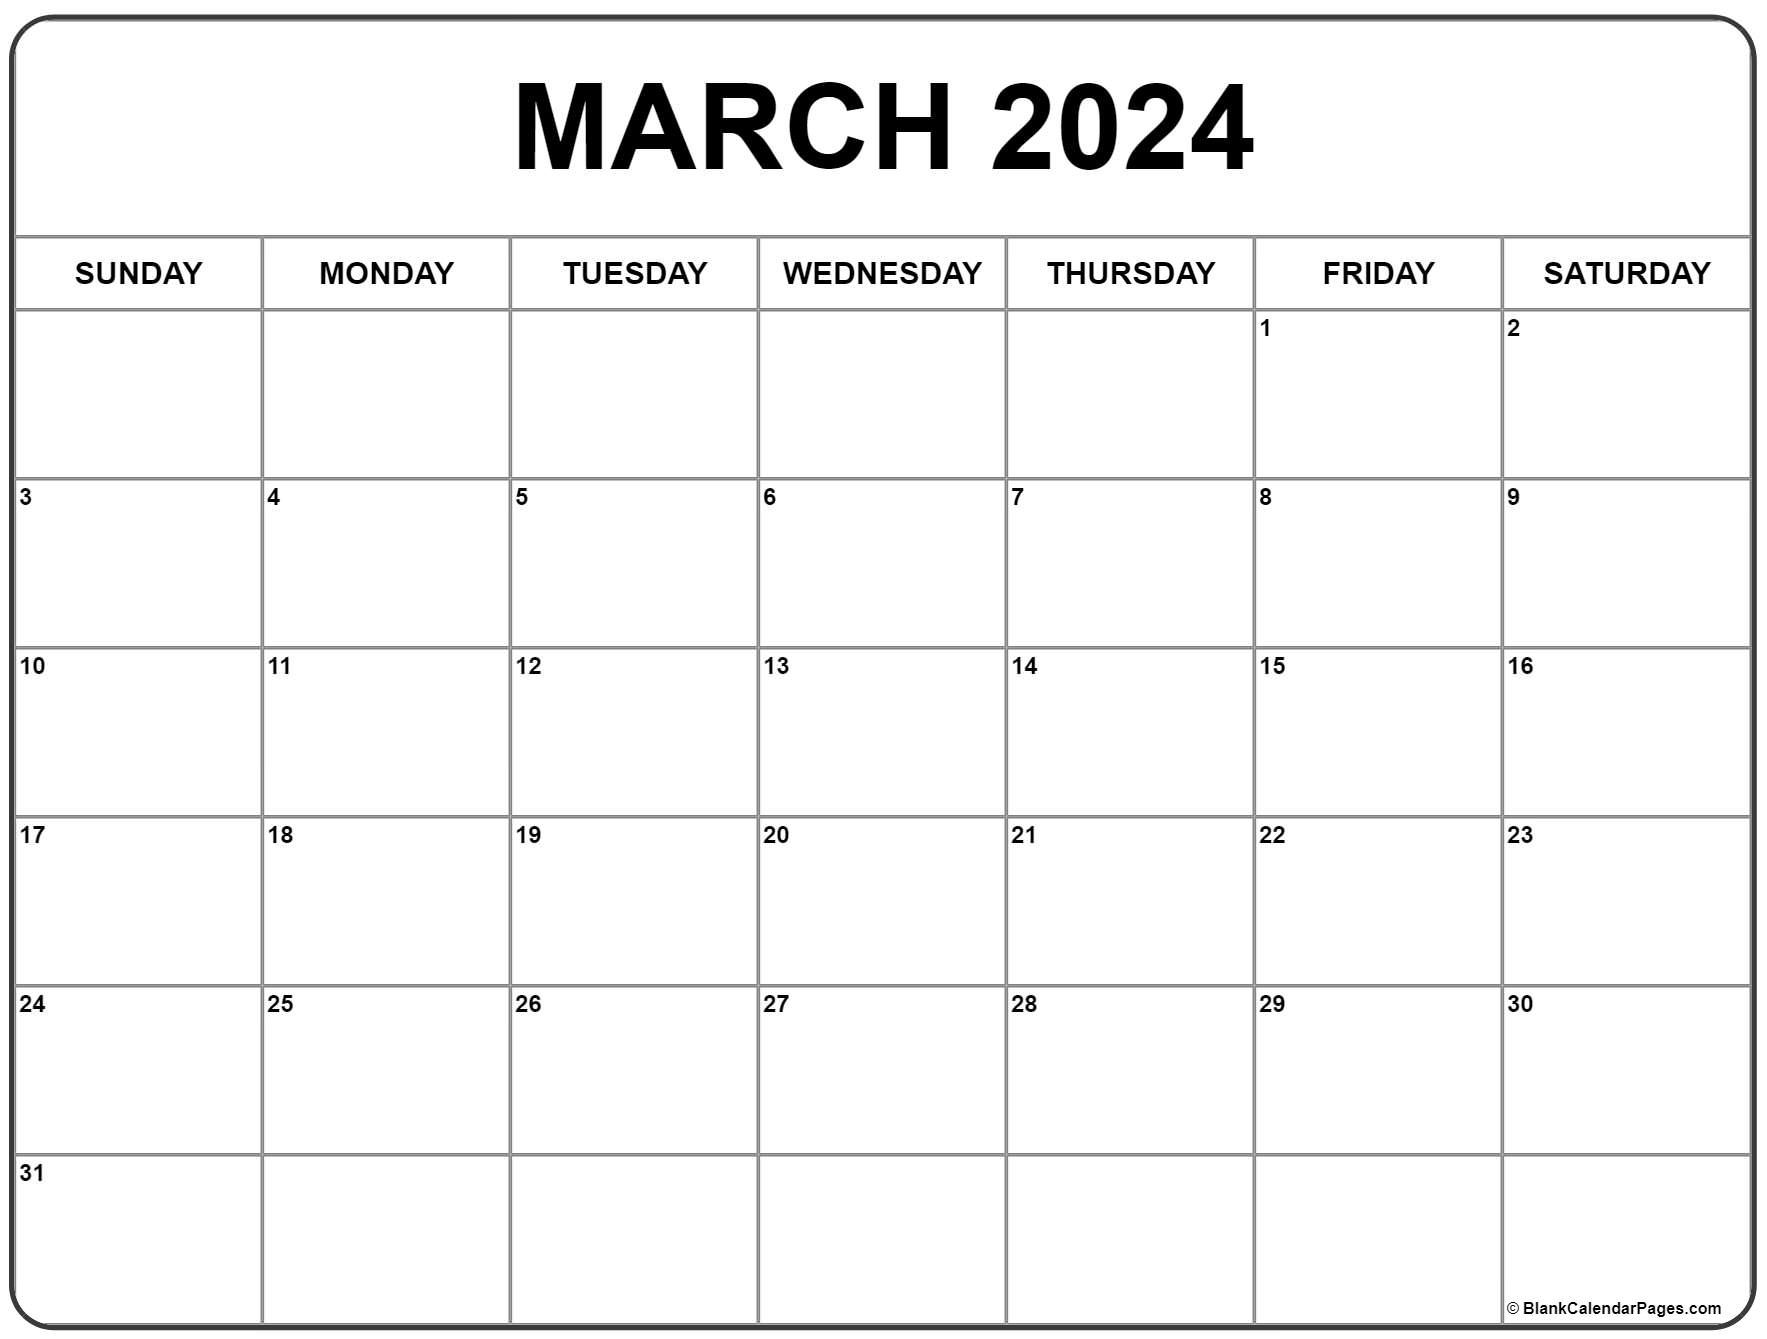 March 2024 Calendar | Free Printable Calendar for Printable Calendar March And April 2024